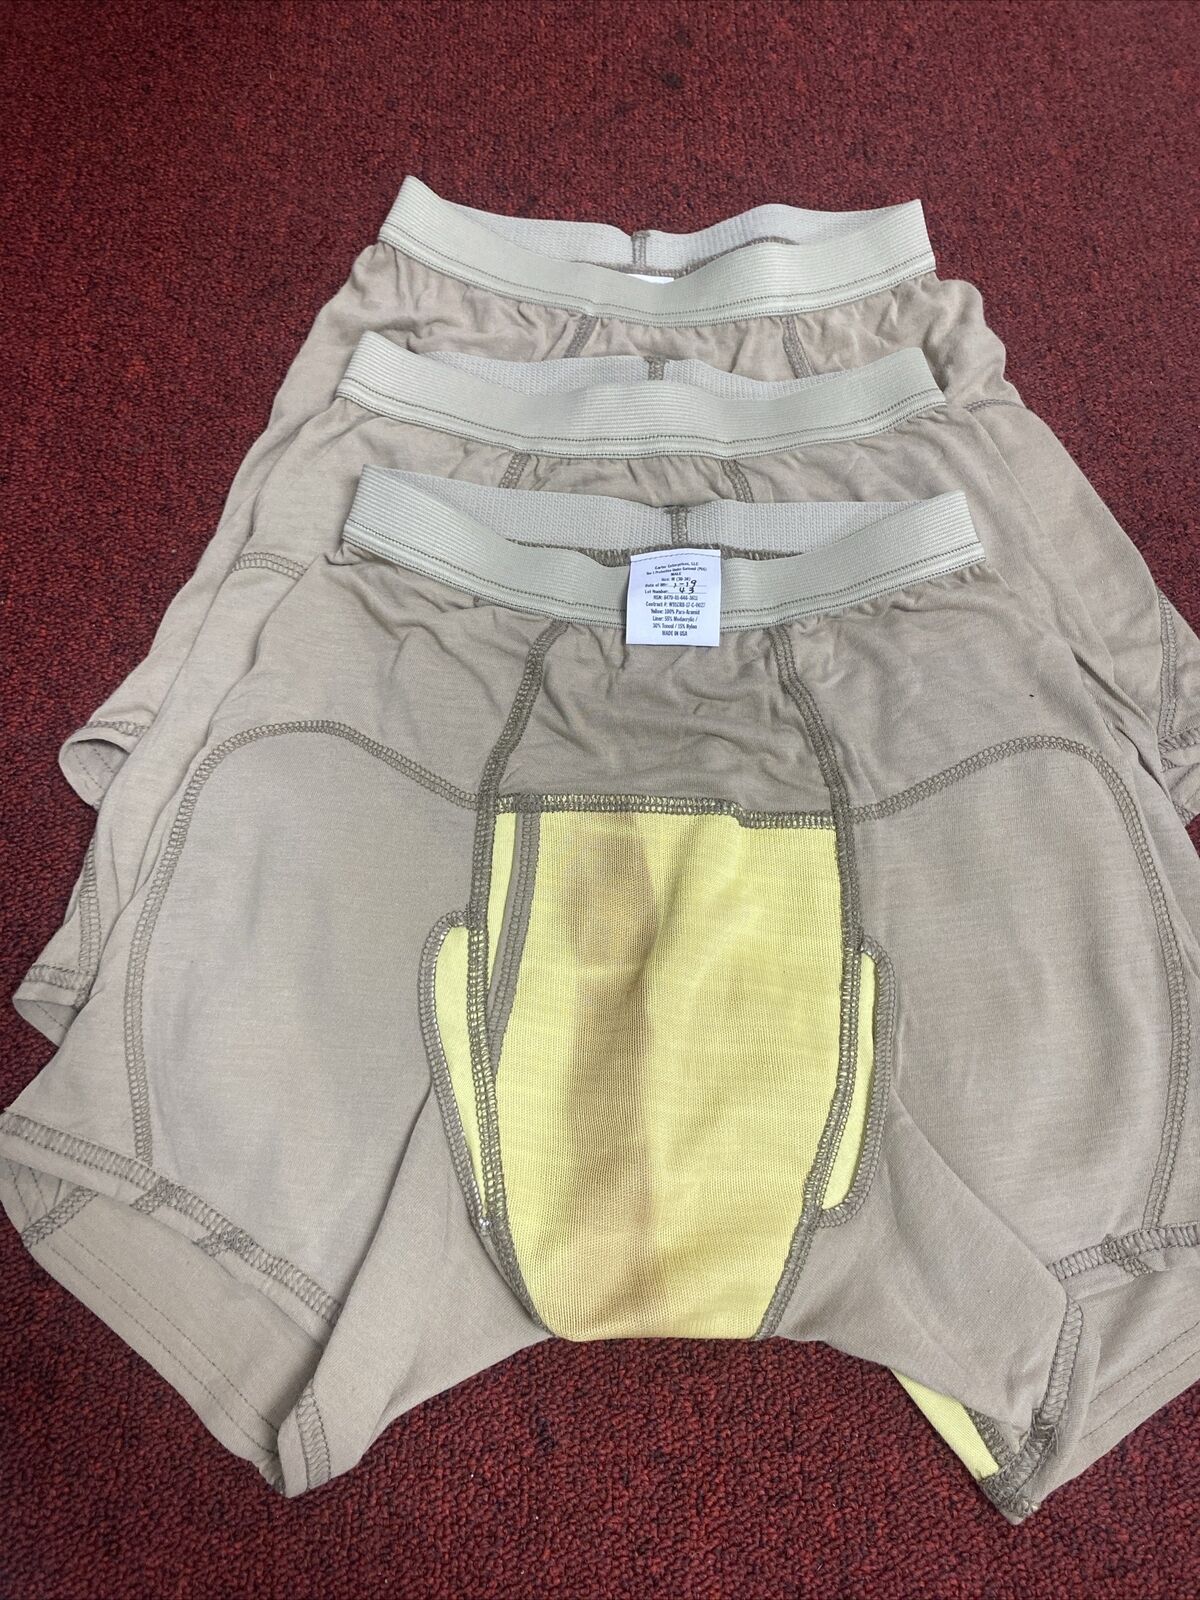 USGI Protective Undergarment PUG ABL Shrapnel Shorts Size Medium